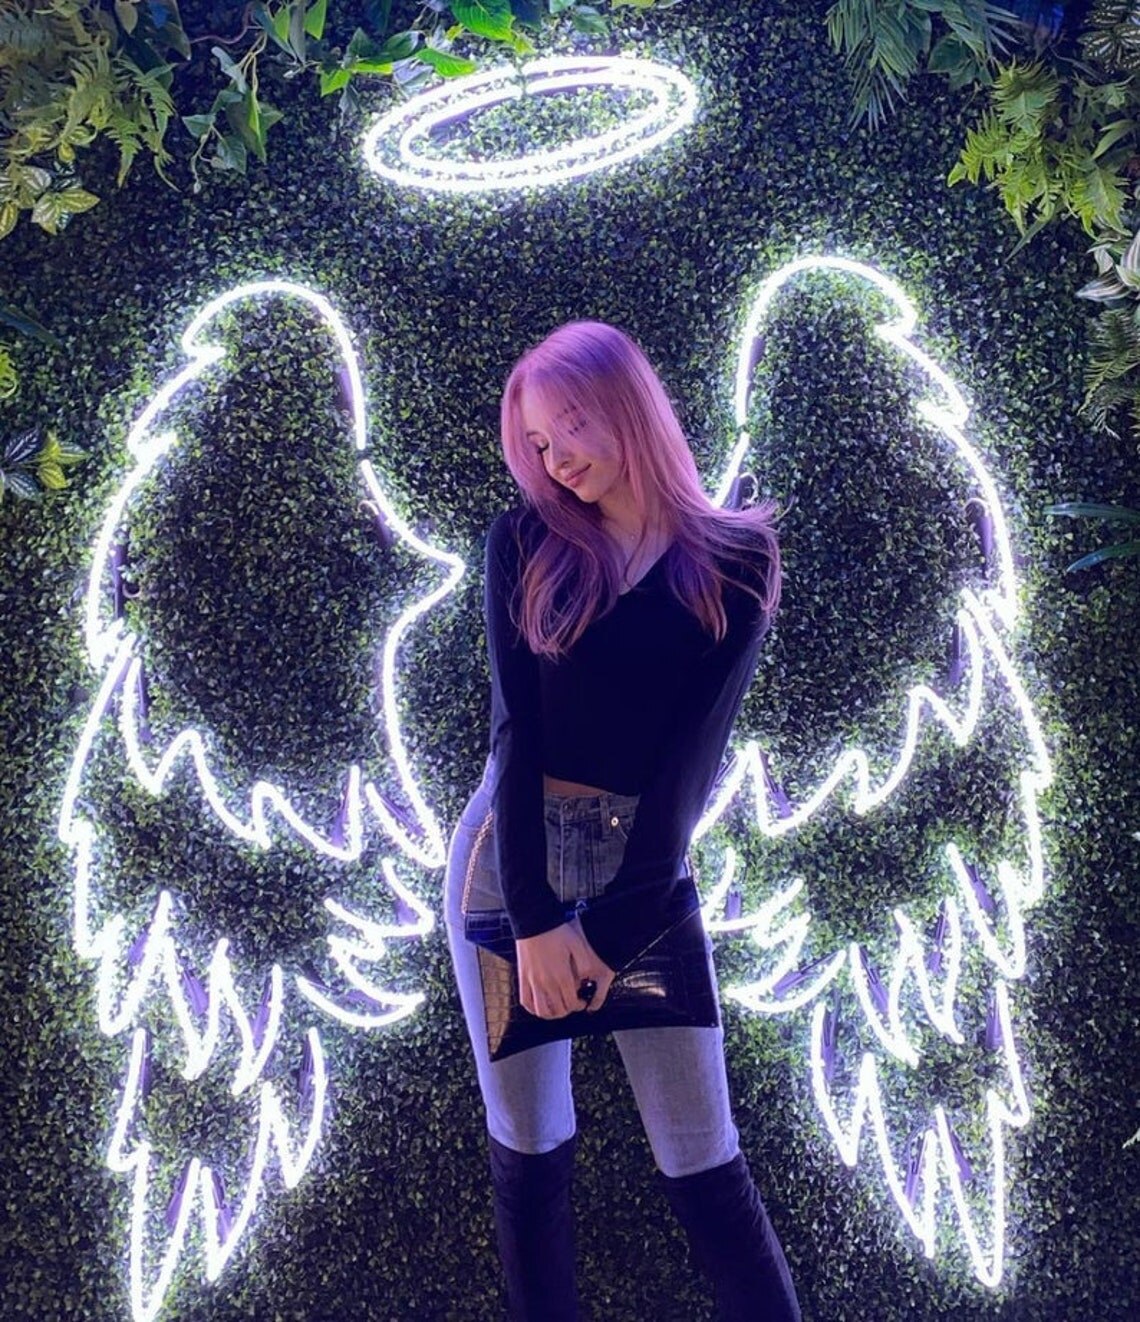 Angel Wings_v1 (+ Halo) — [pick colour]